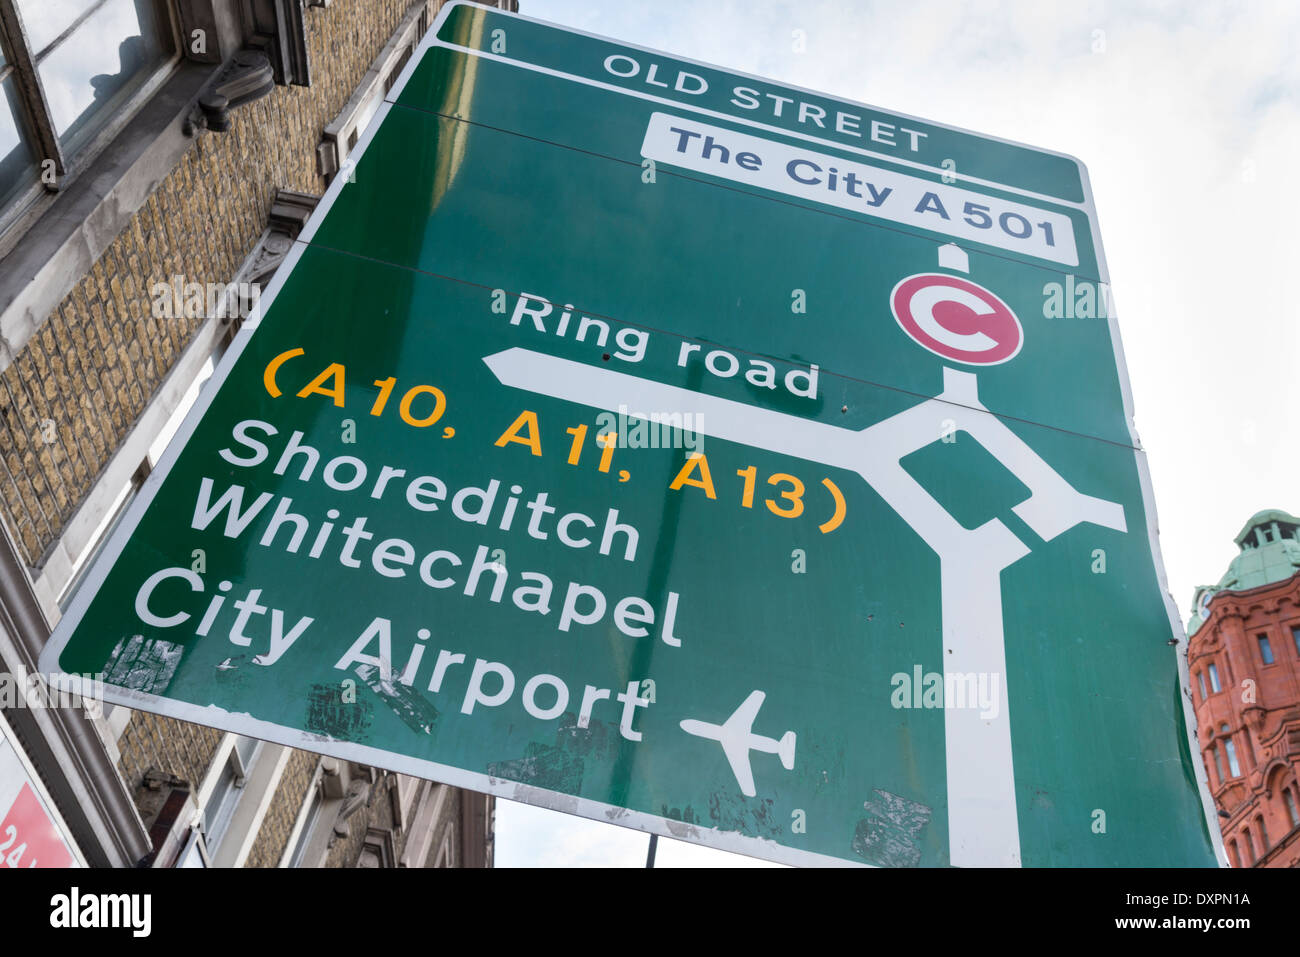 Old Street Roundabout road sign, London, England, UK Stock Photo